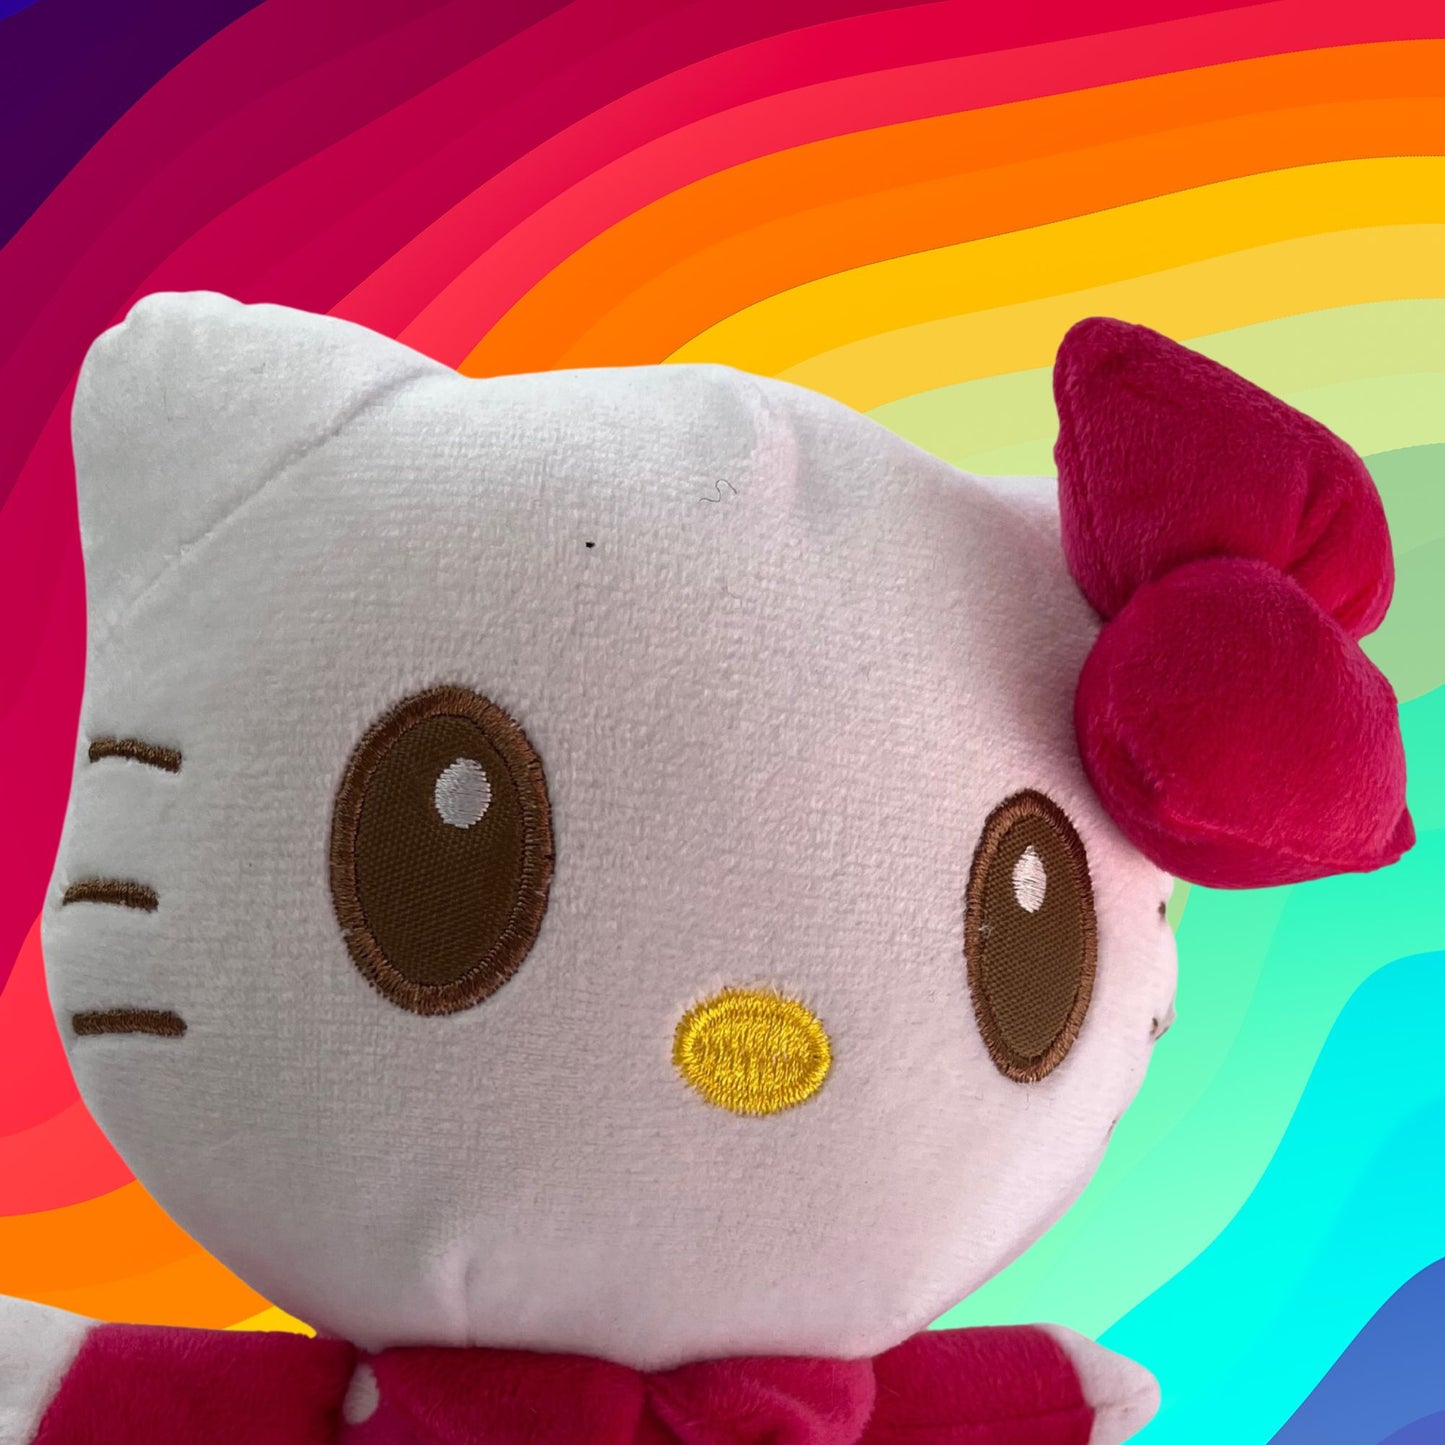 Hello Kitty Loving Plush Toy Gift Kit + Personalized Magic Mug